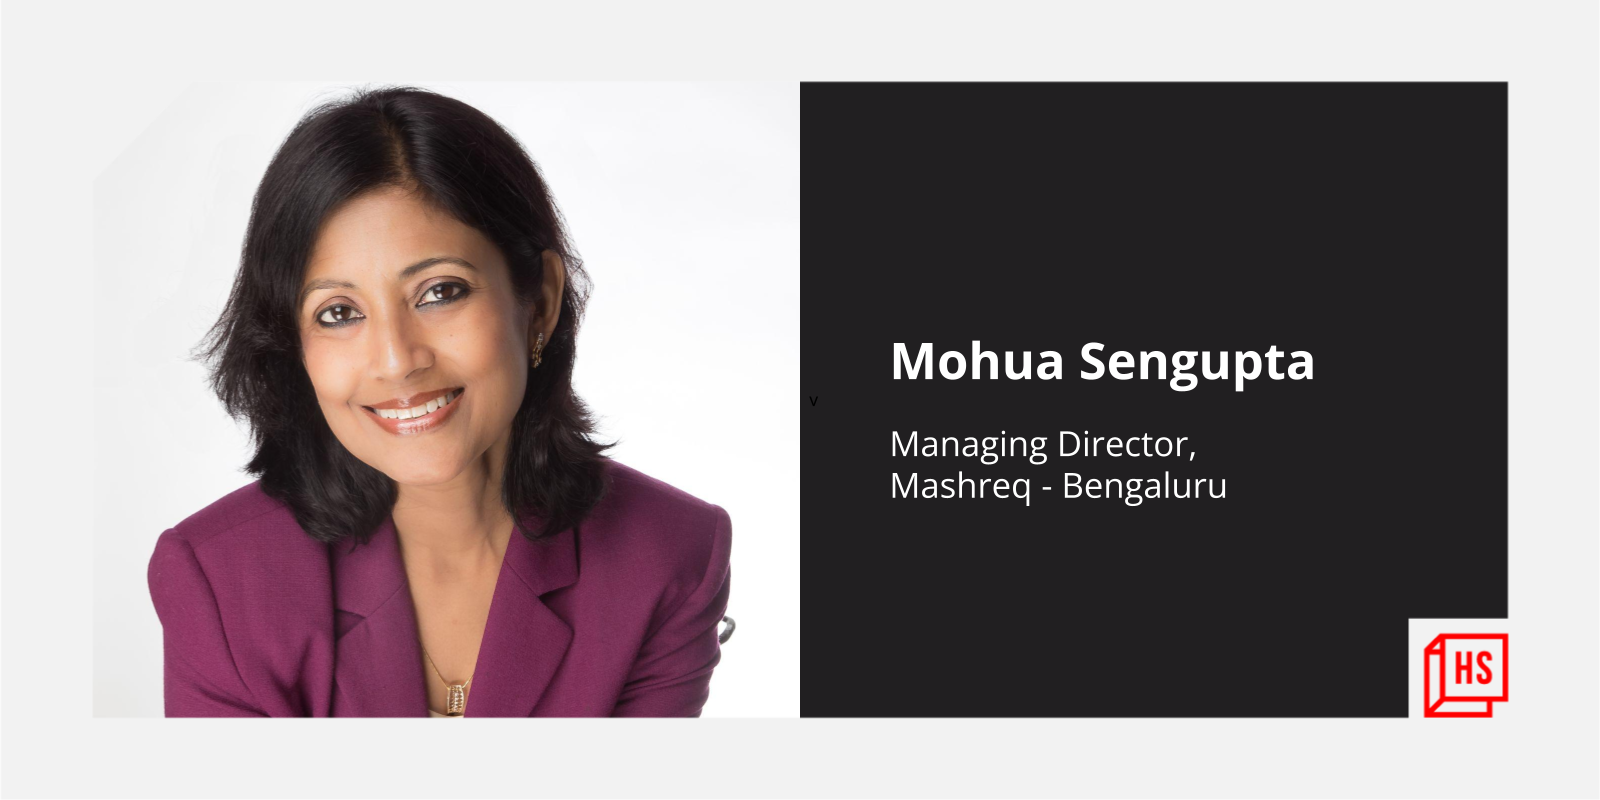 [Women in Tech] Companies shouldn’t hire women just to meet HR target, says Mohua Sengupta of Mashreq

